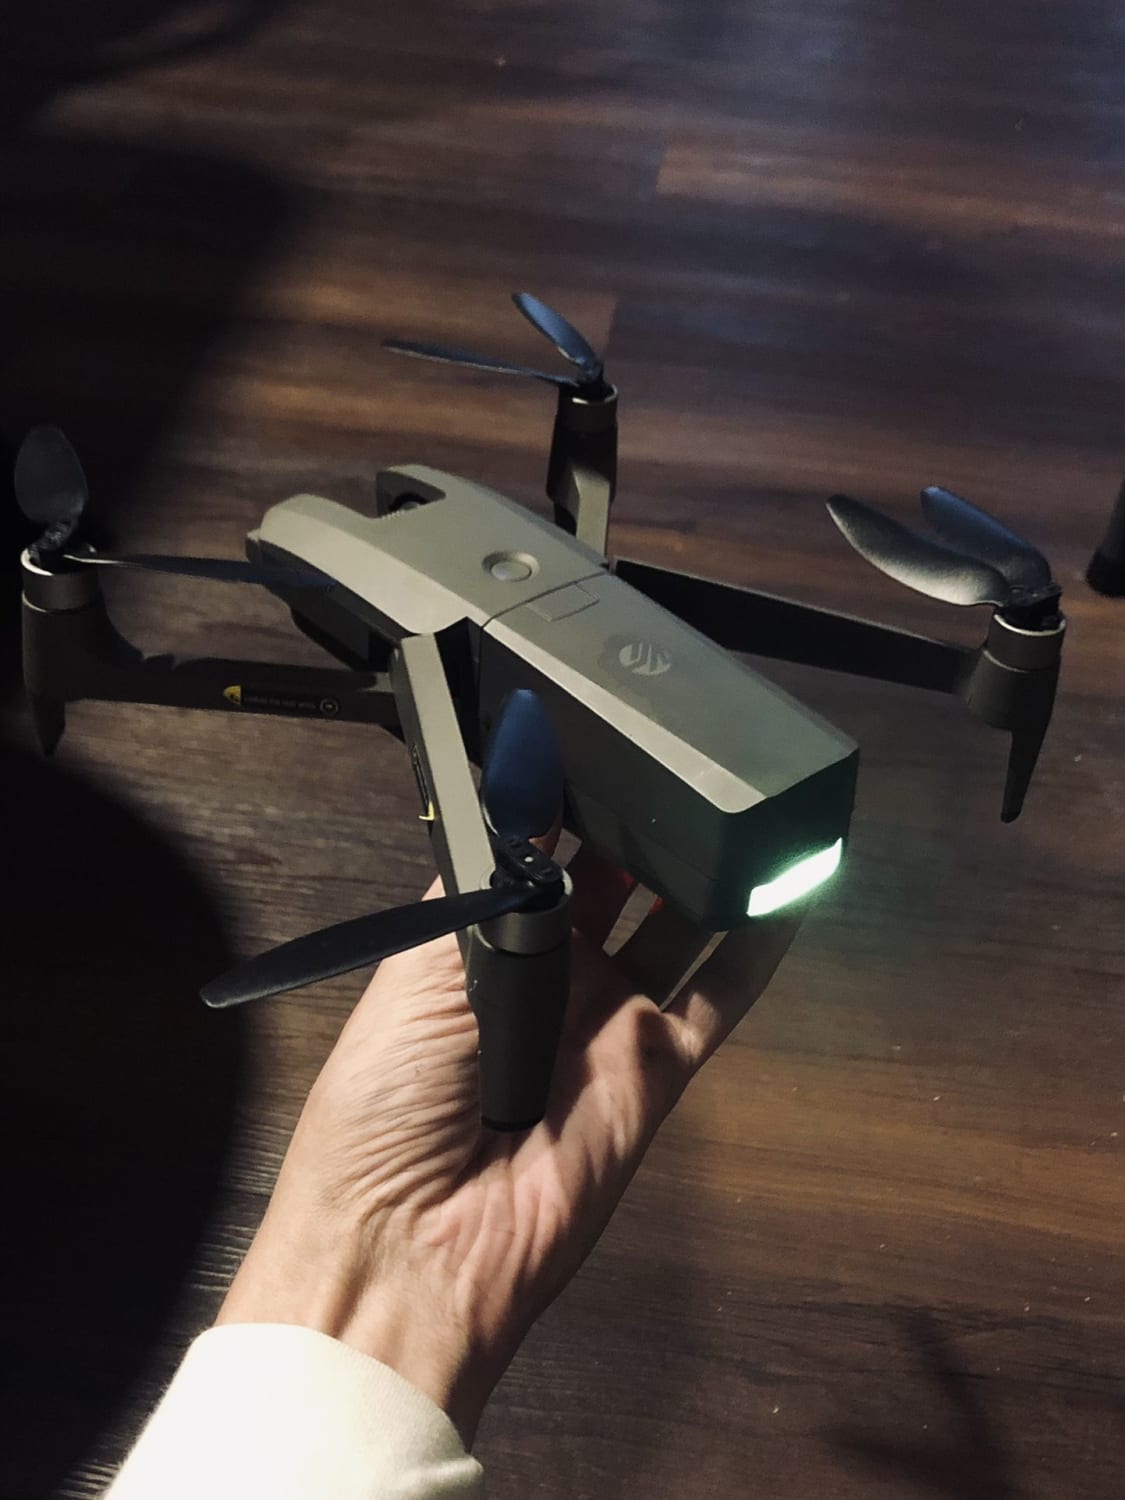 Vivitar VTI Phoenix Foldable GPS Camera Drone for Sale in Melbourne, FL